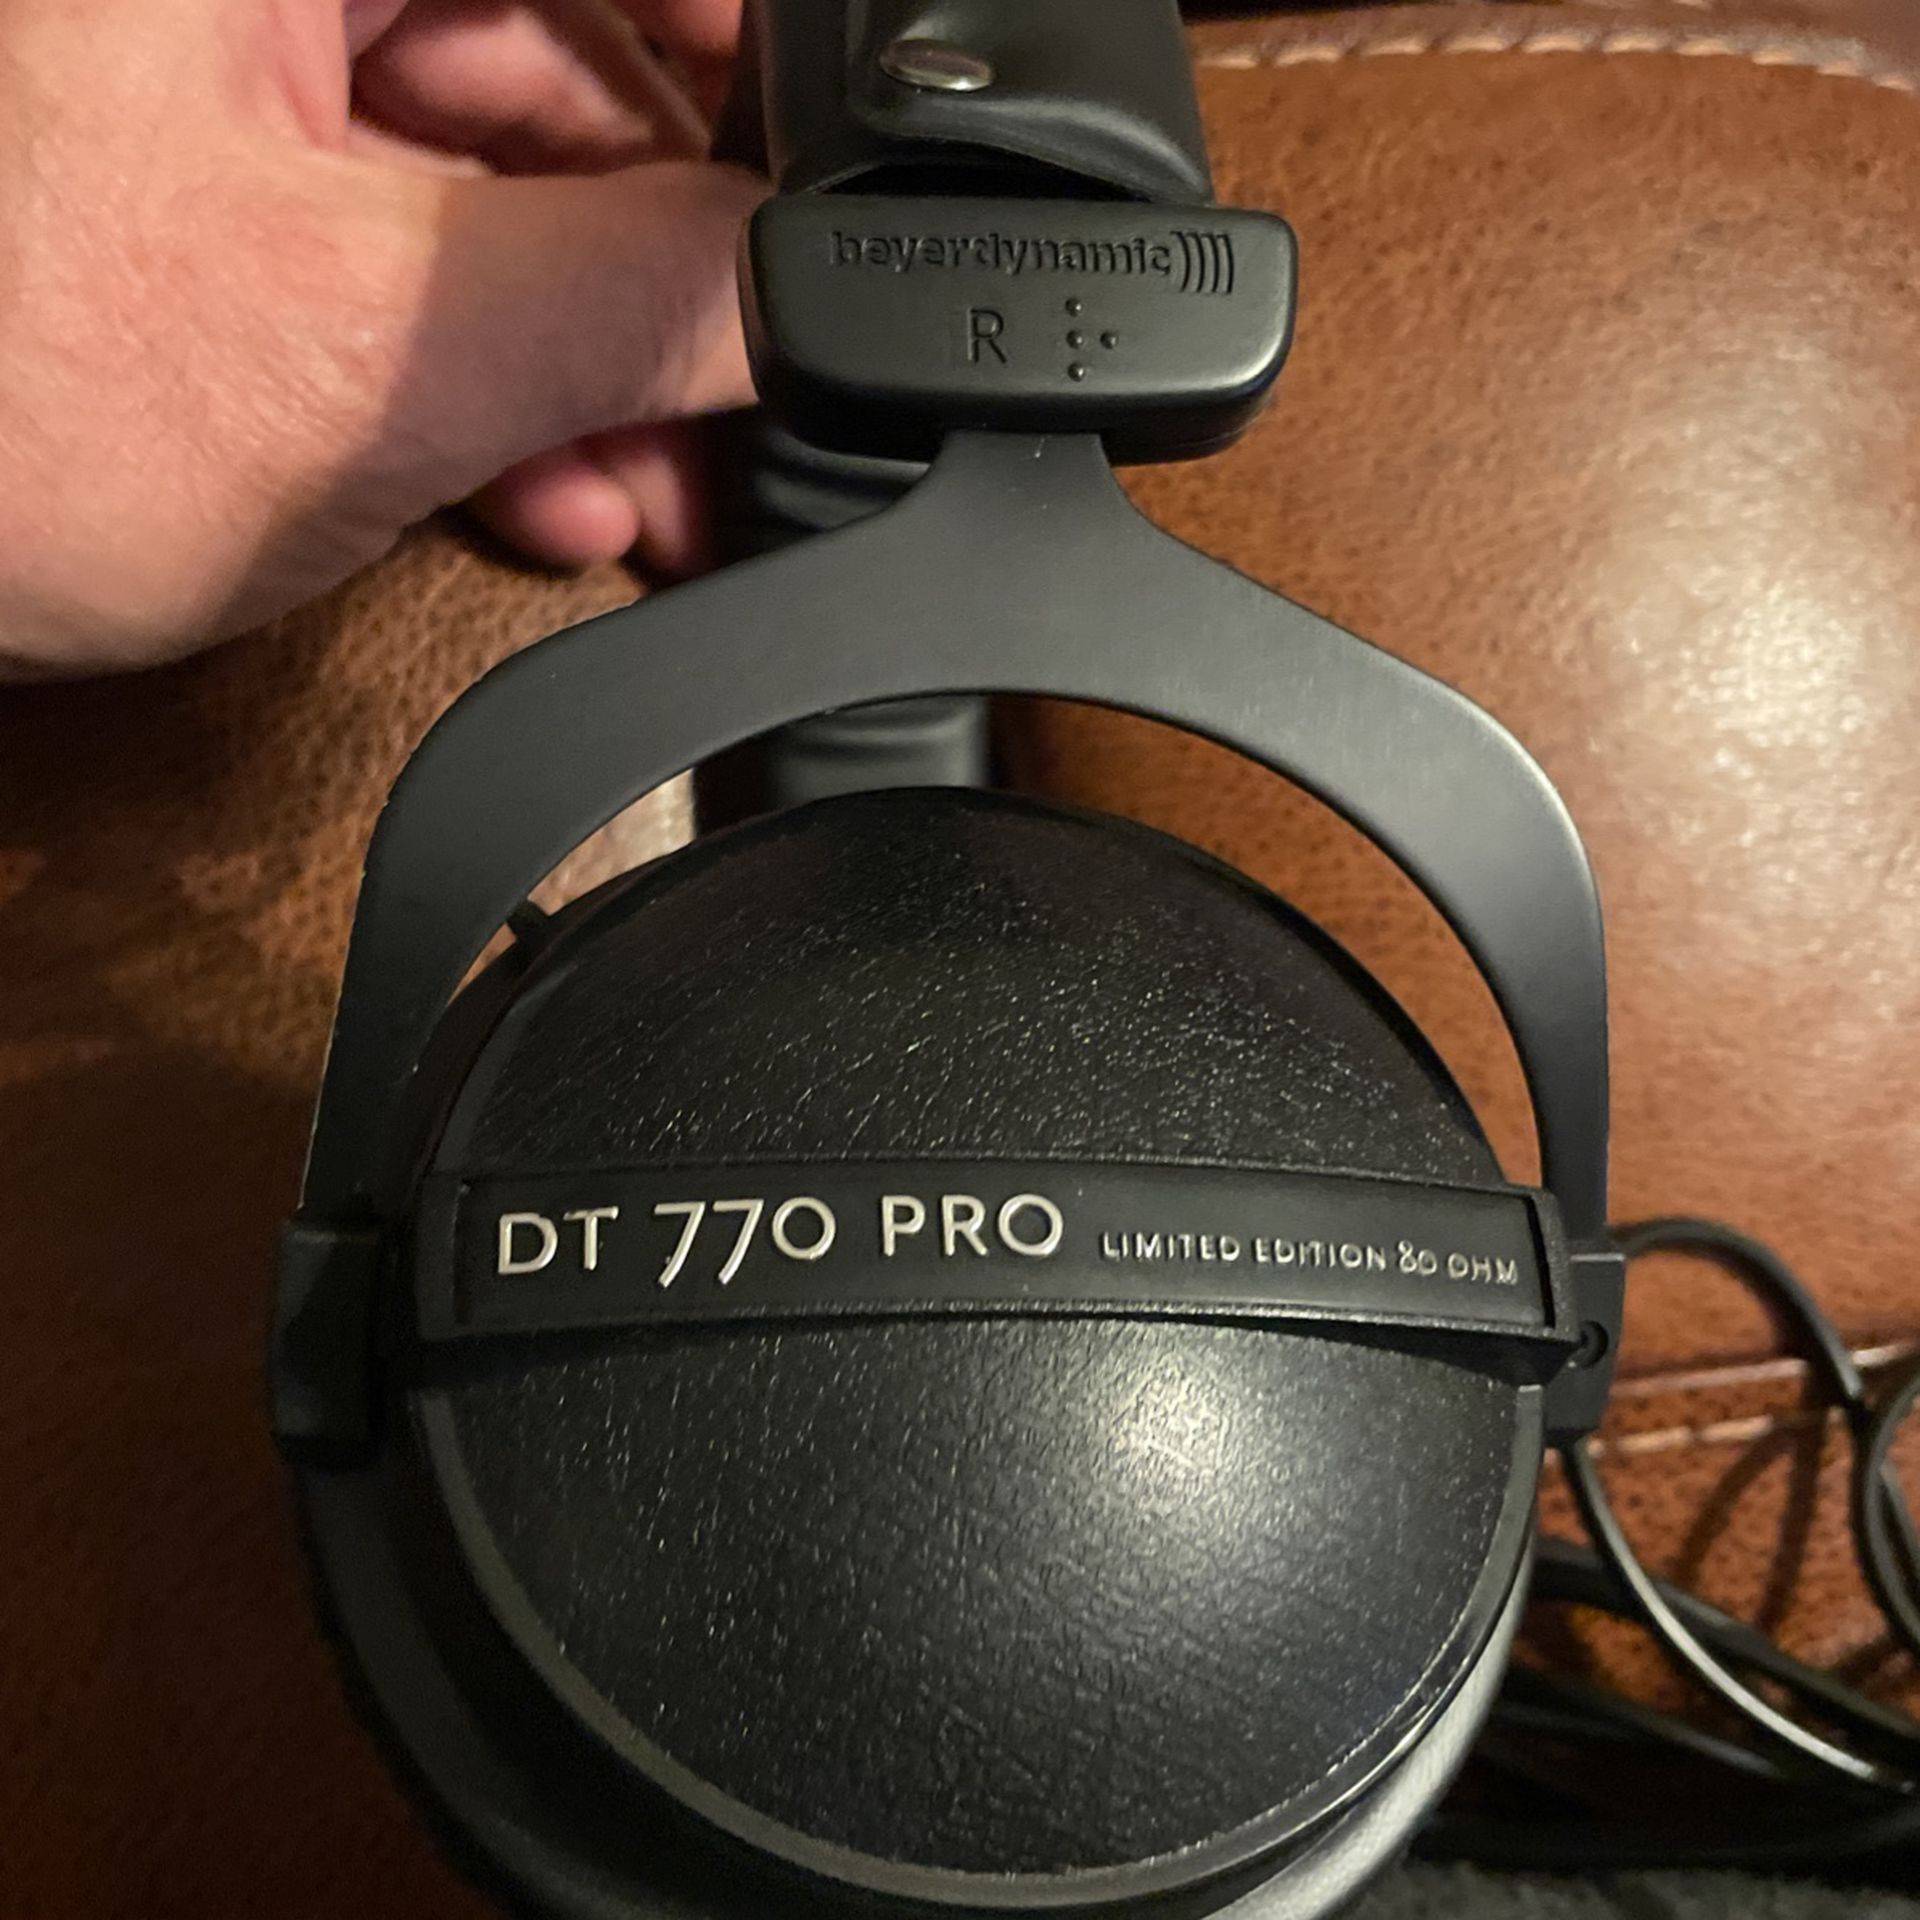 Beyerdynamic DT 770 Pro 80 ohm Closed Back Reference Studio Tracking Headphones